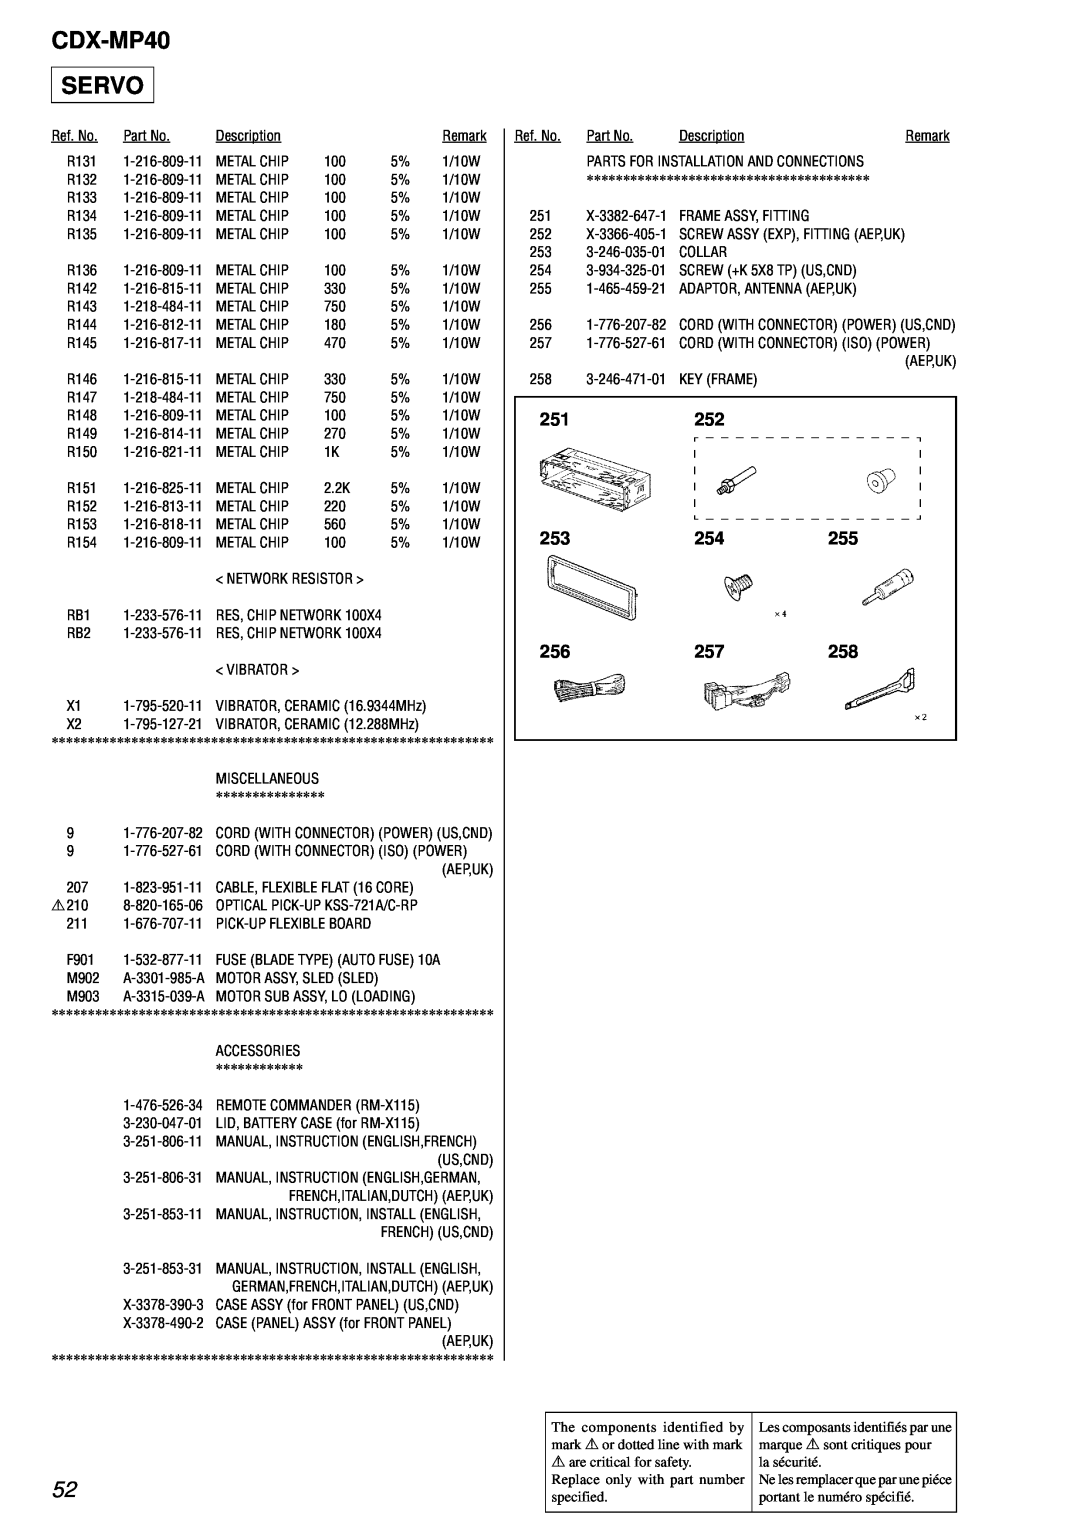 Sony service manual 251252, CDX-MP40 SERVO, Ref. No 